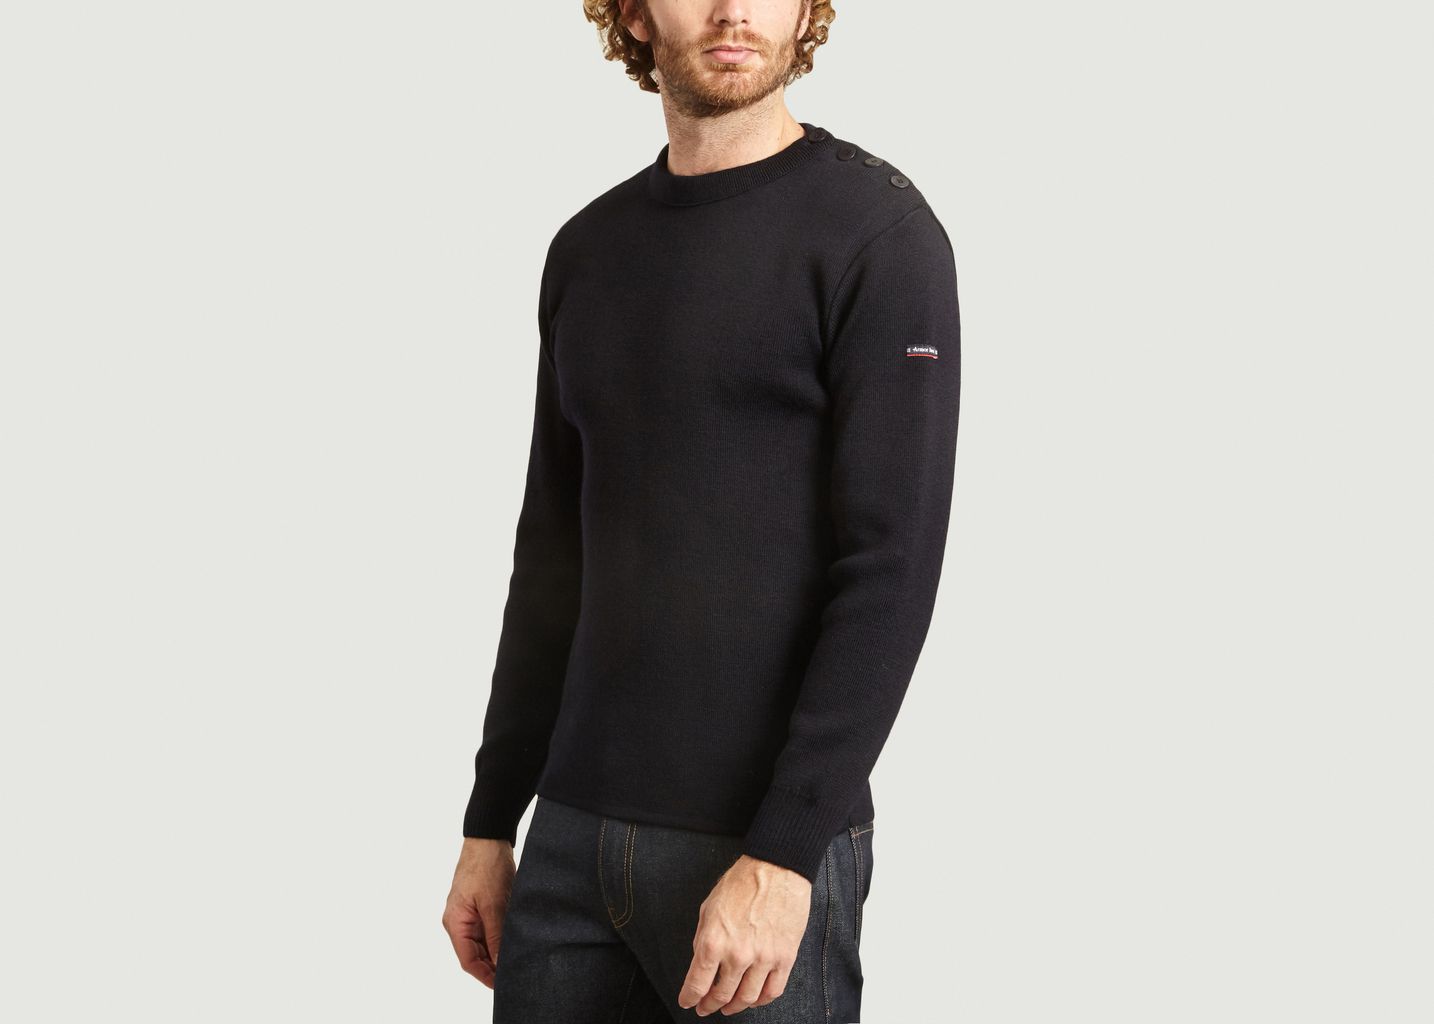 Fouesnant plain marine sweater - Armor Lux